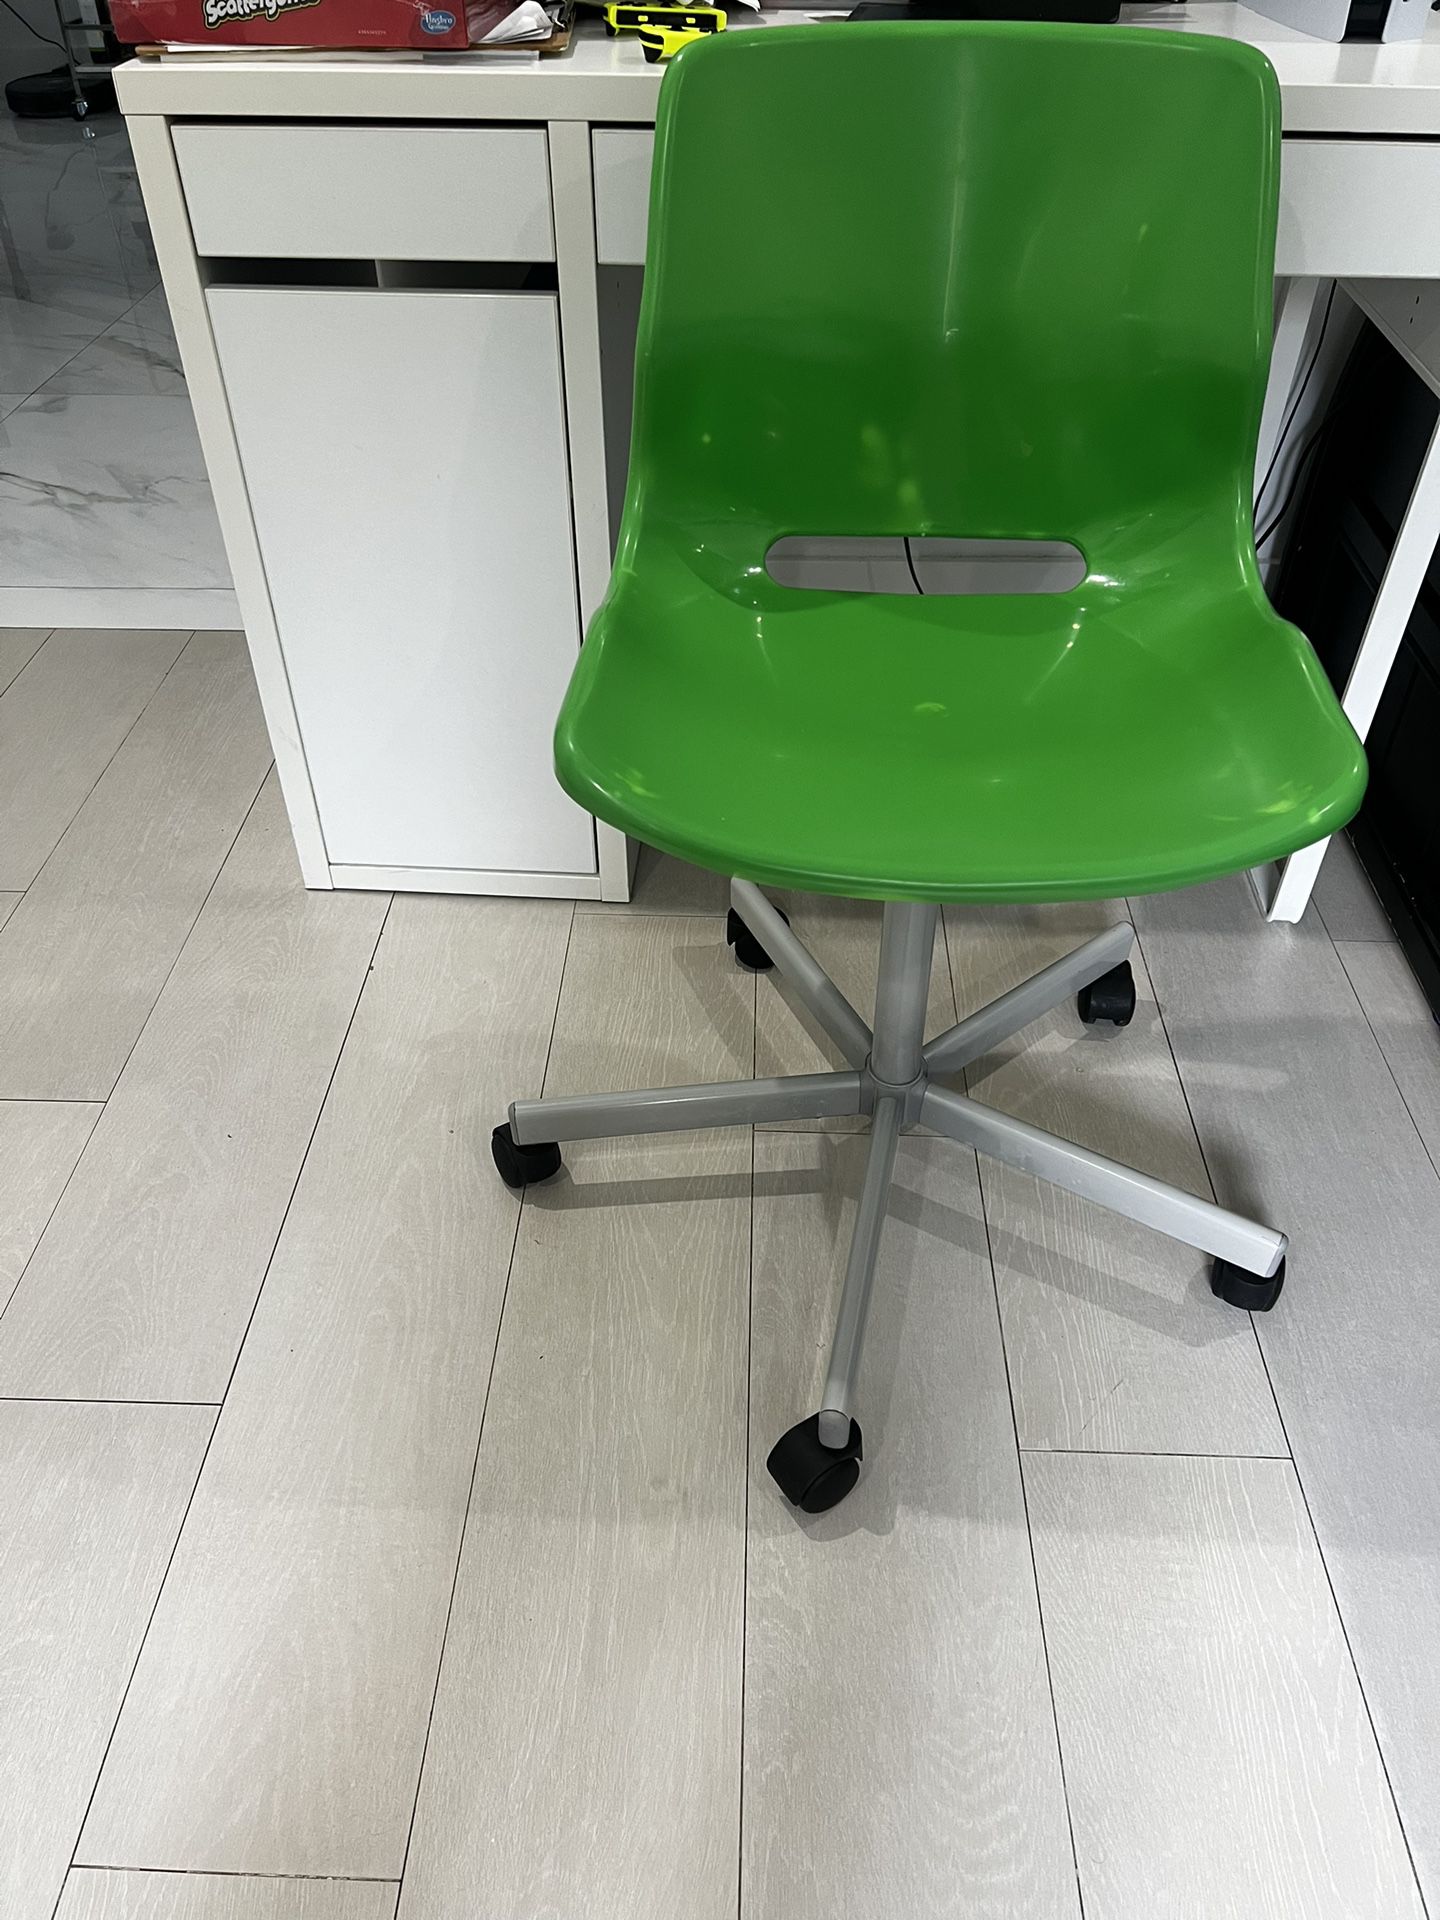 Ikea green desk chair Excellent 